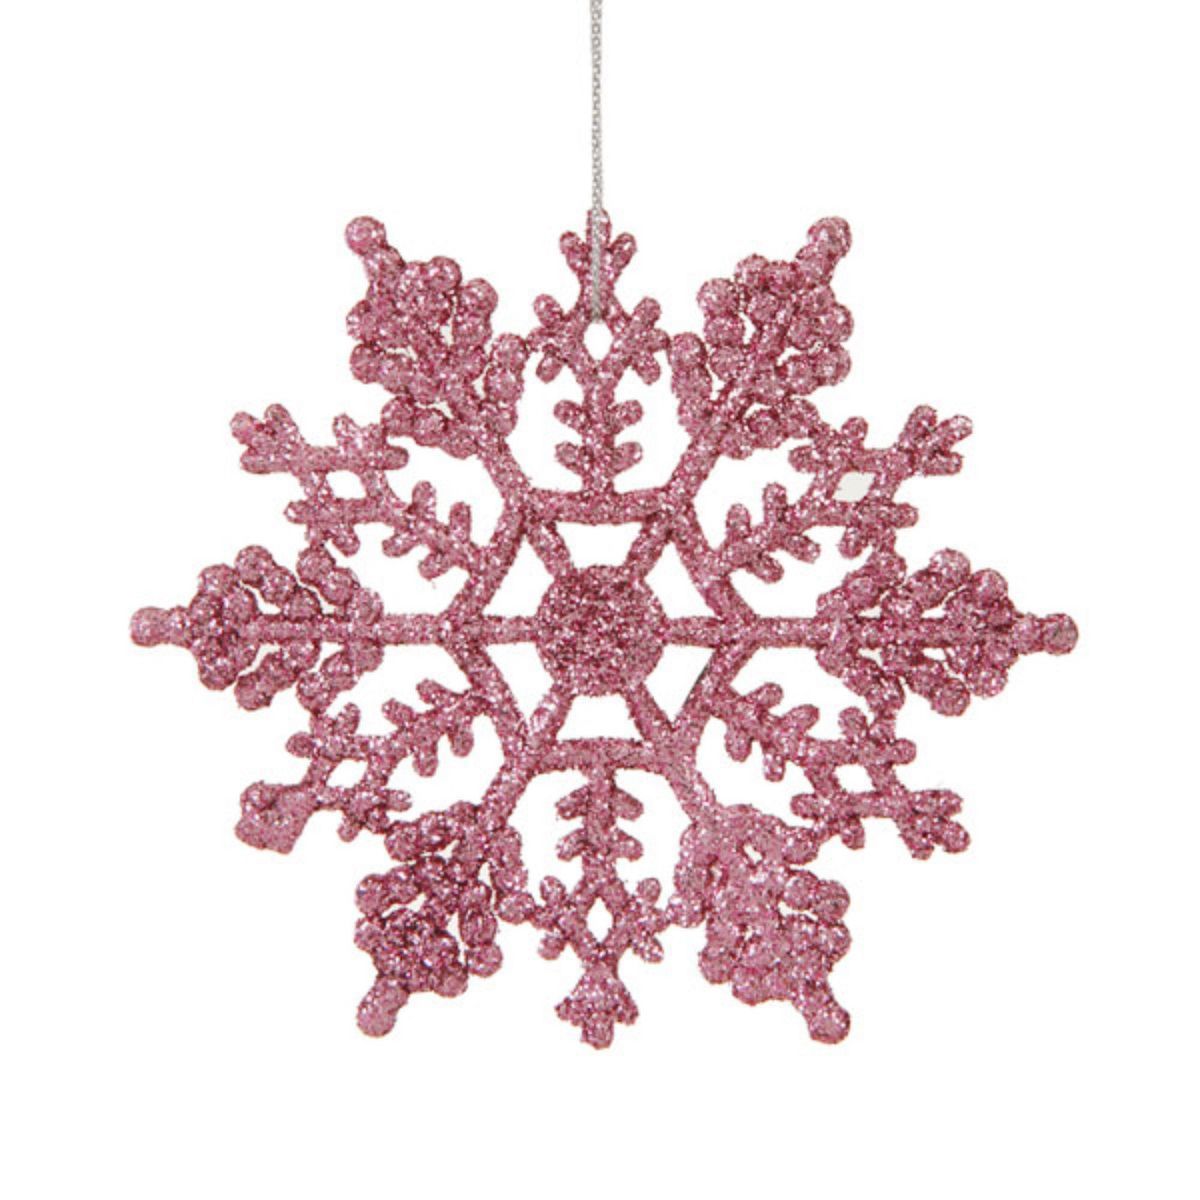 Northlight 24ct Glitter Snowflake Christmas Ornament Set 4" - Mauve Pink | Target